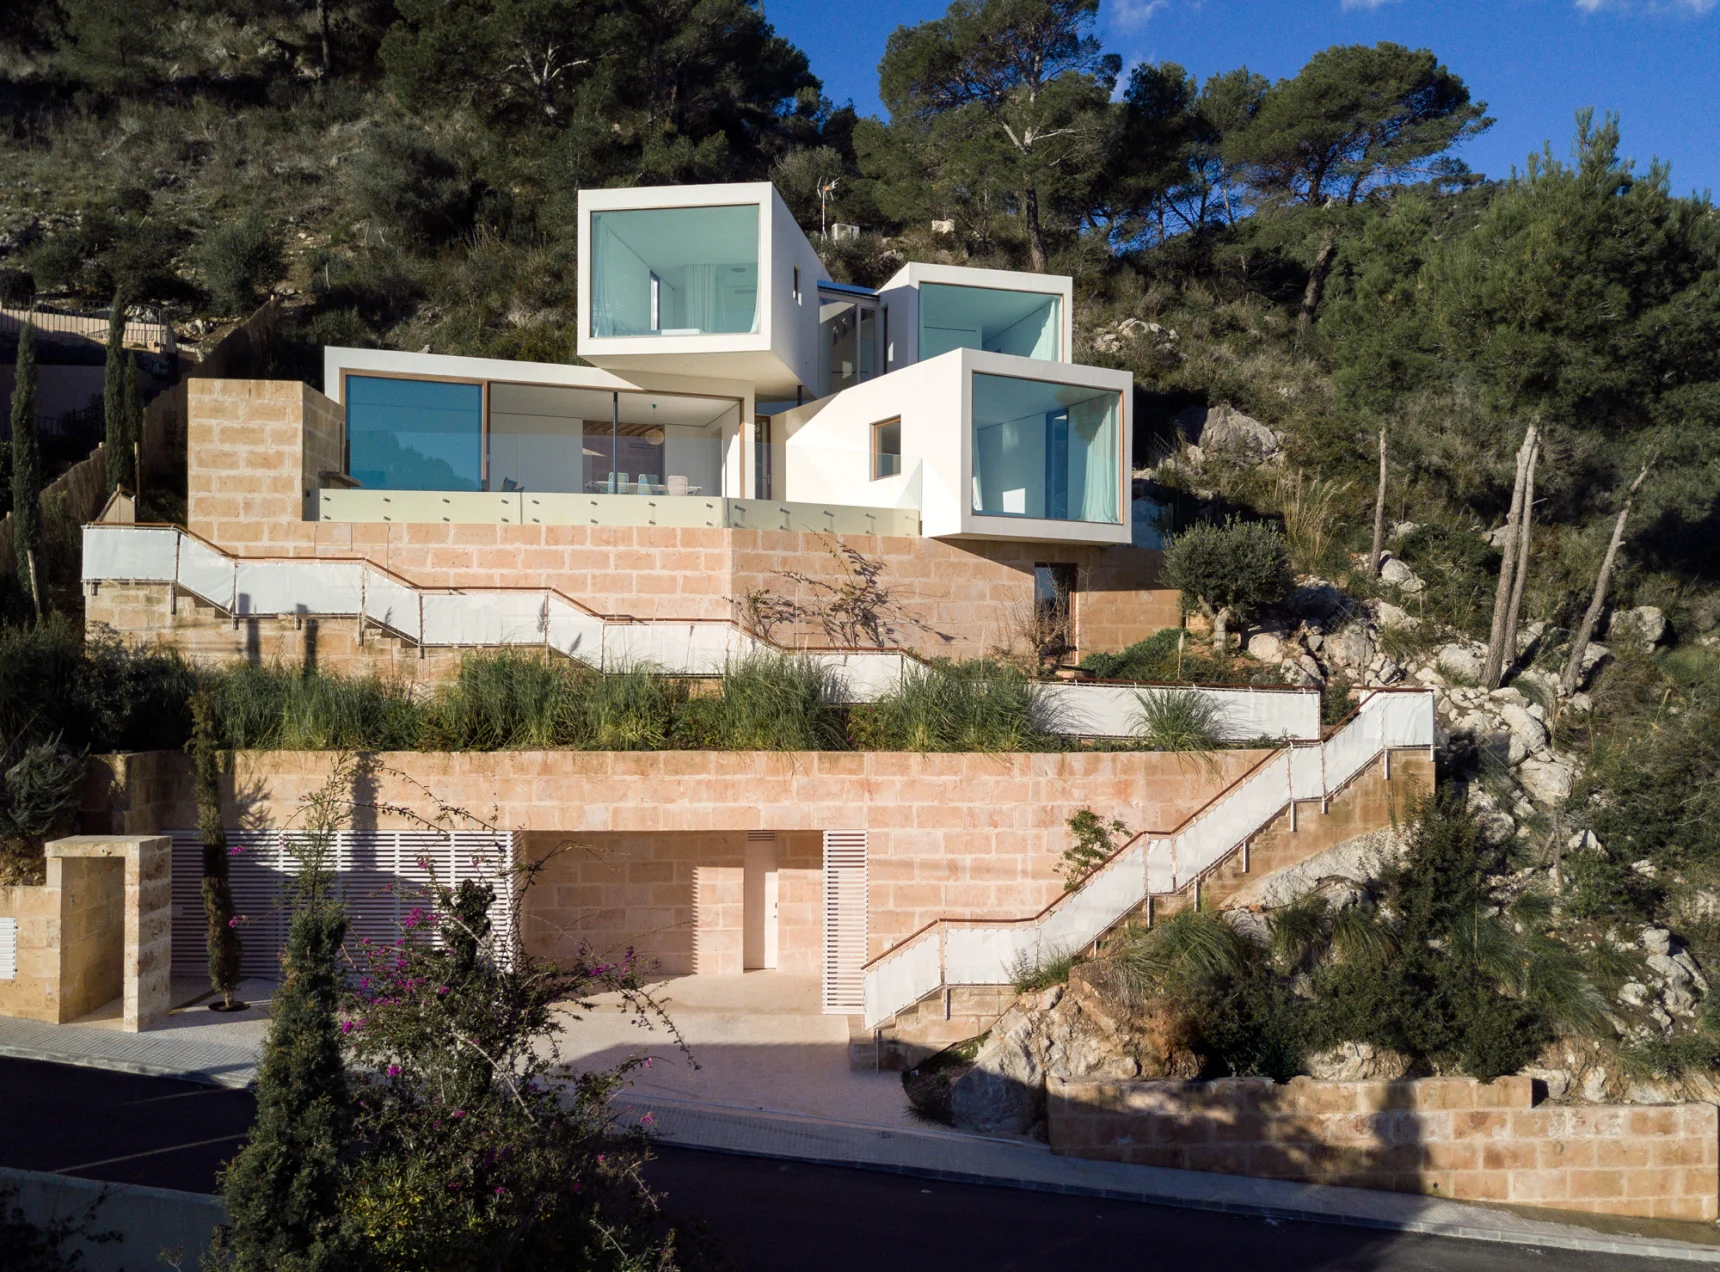 Spanish Island House Embraces The Senses Of The Mediterranean